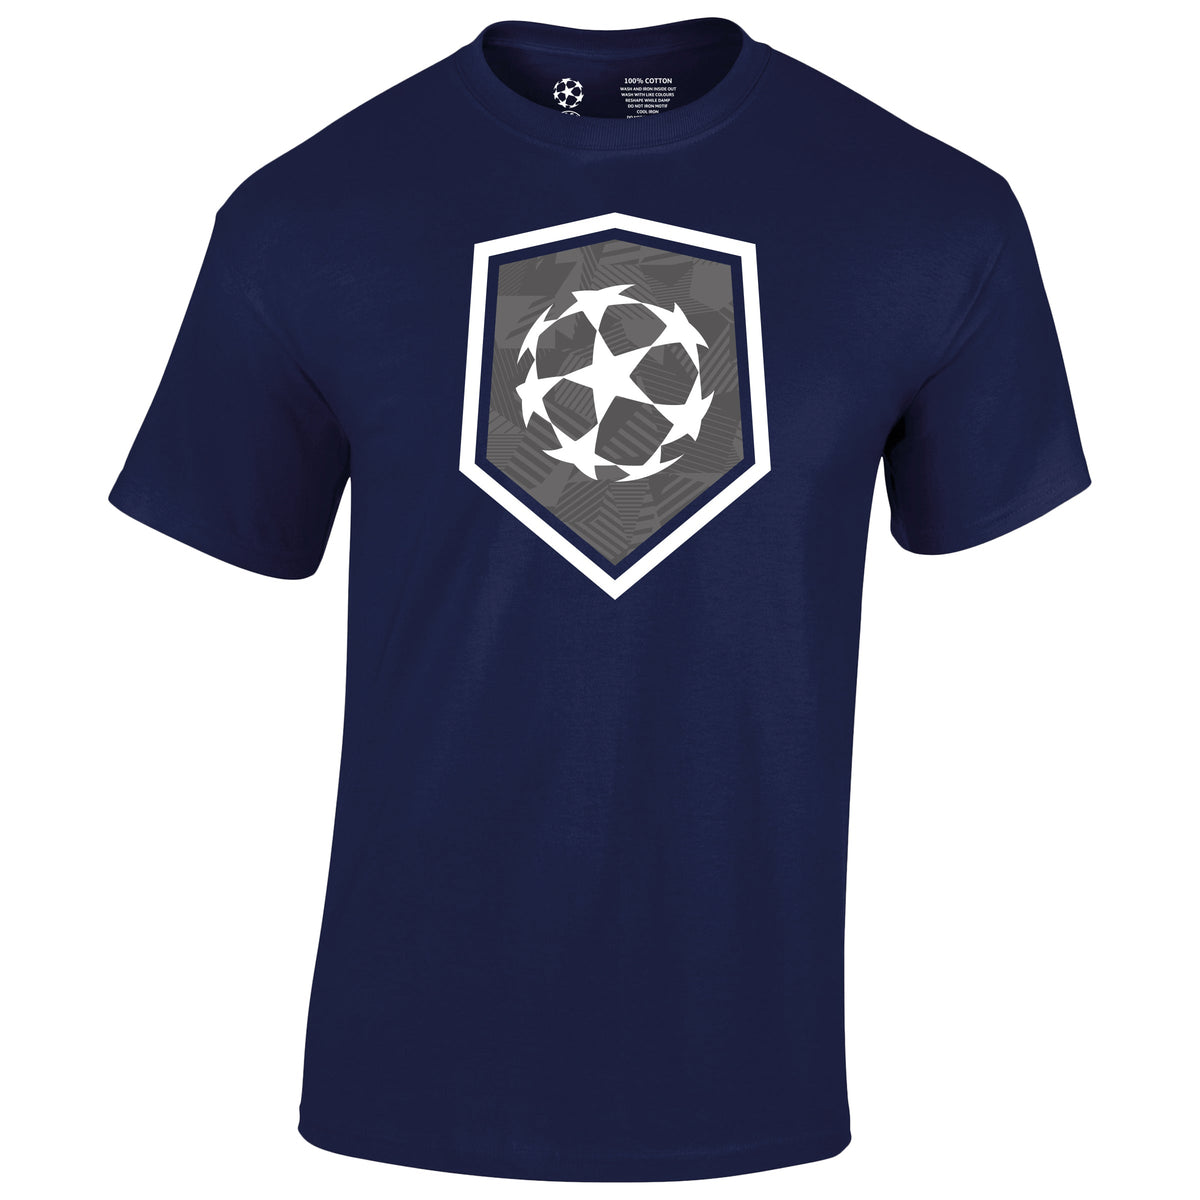 Champions League Starball Shield T-Shirt Navy